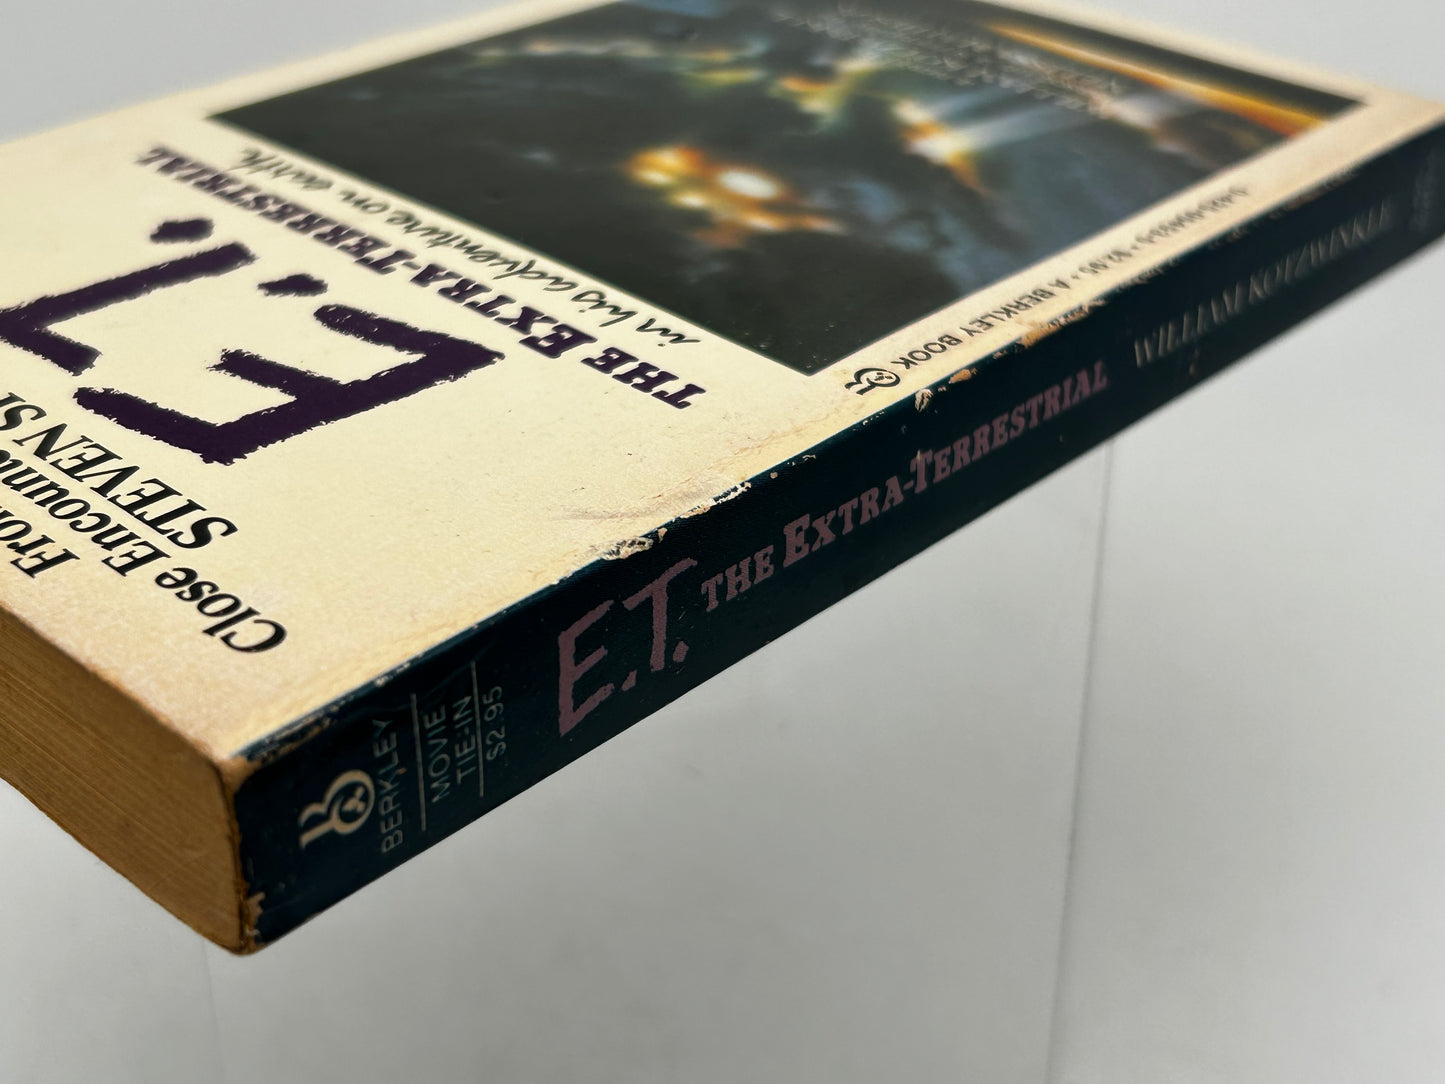 E.T. The Extra-Terrestrial BERKLEY Paperback William Kotzwinkle HS4